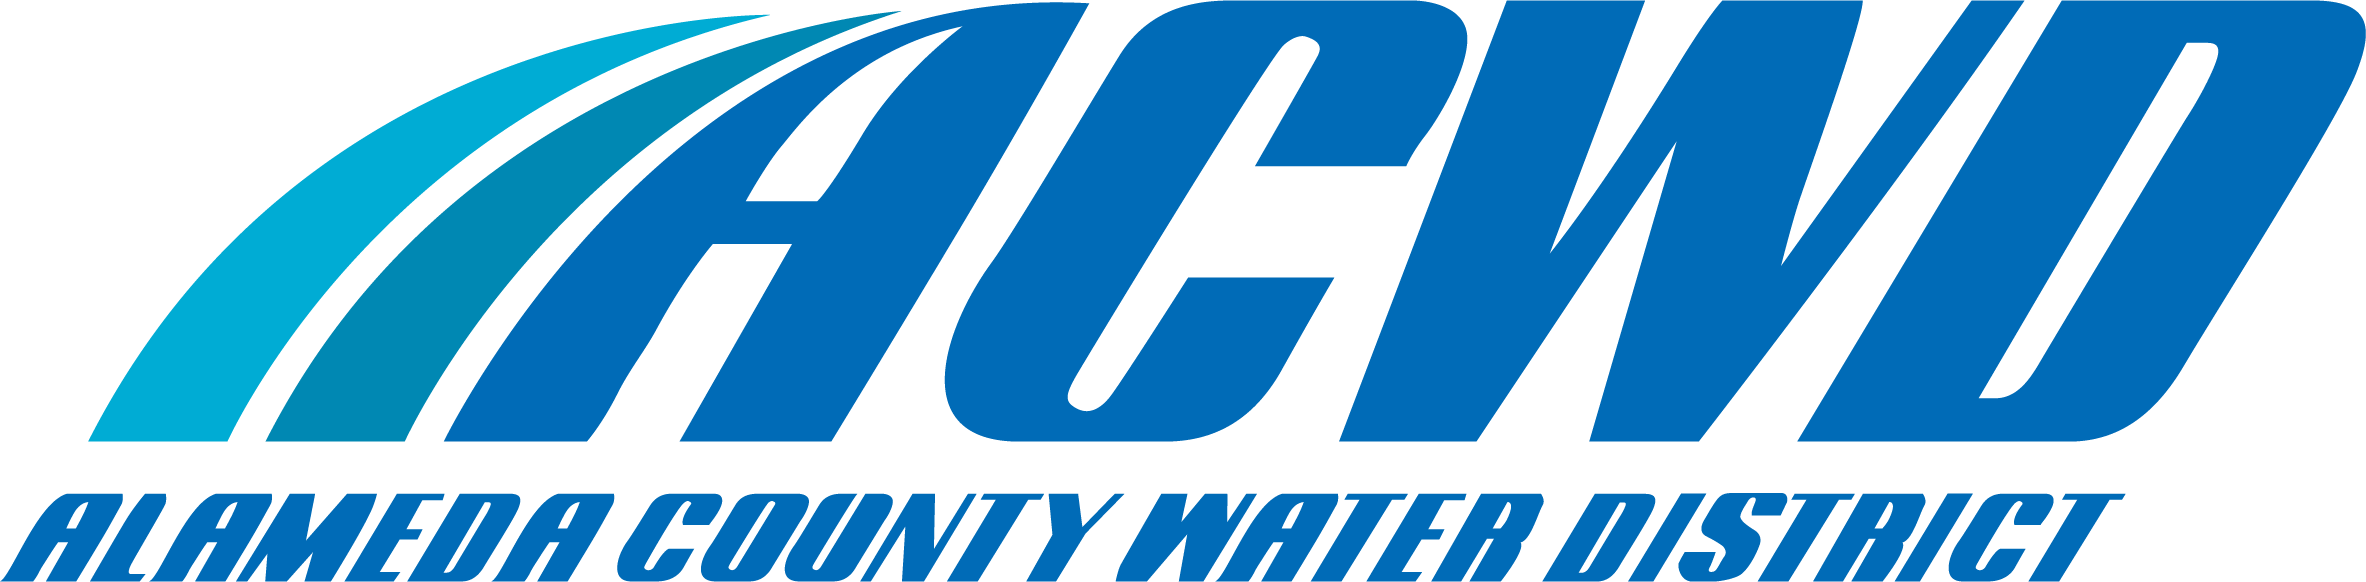 Organization logo of Alameda County Water District